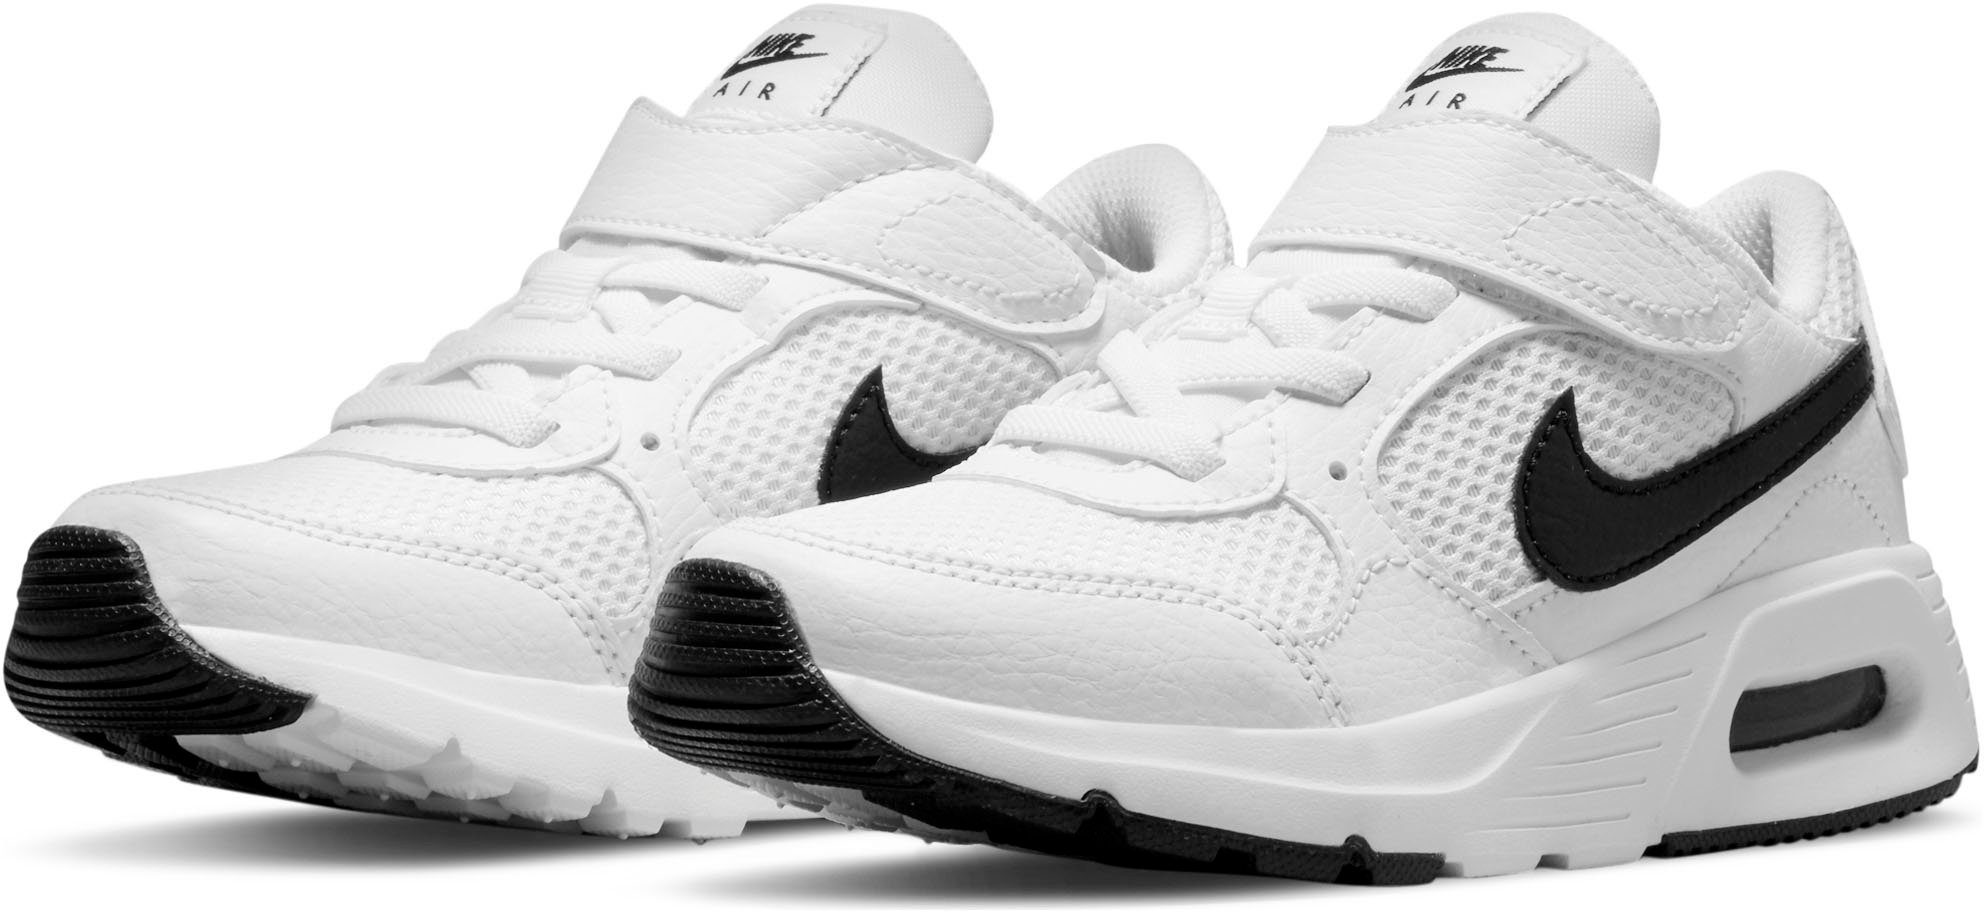 AIR Nike Sneaker Sportswear weiß-schwarz (PS) MAX SC